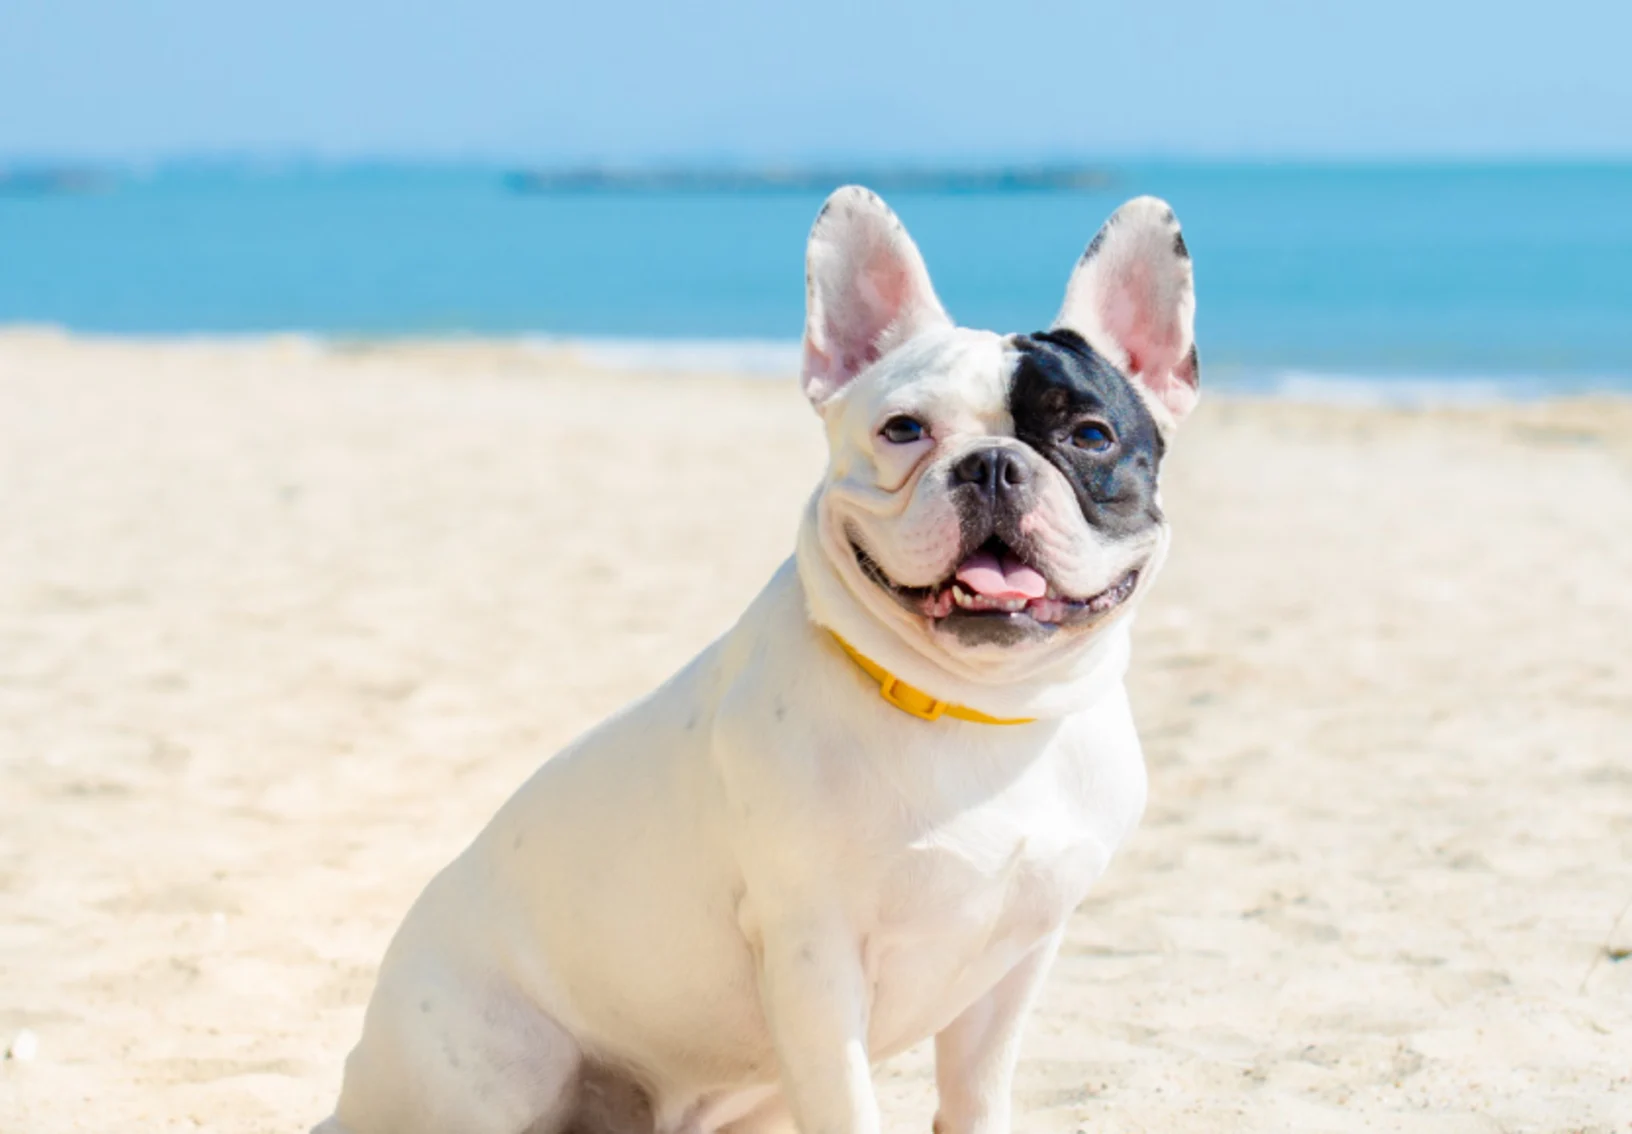 Bulldog with tongue out at the beach